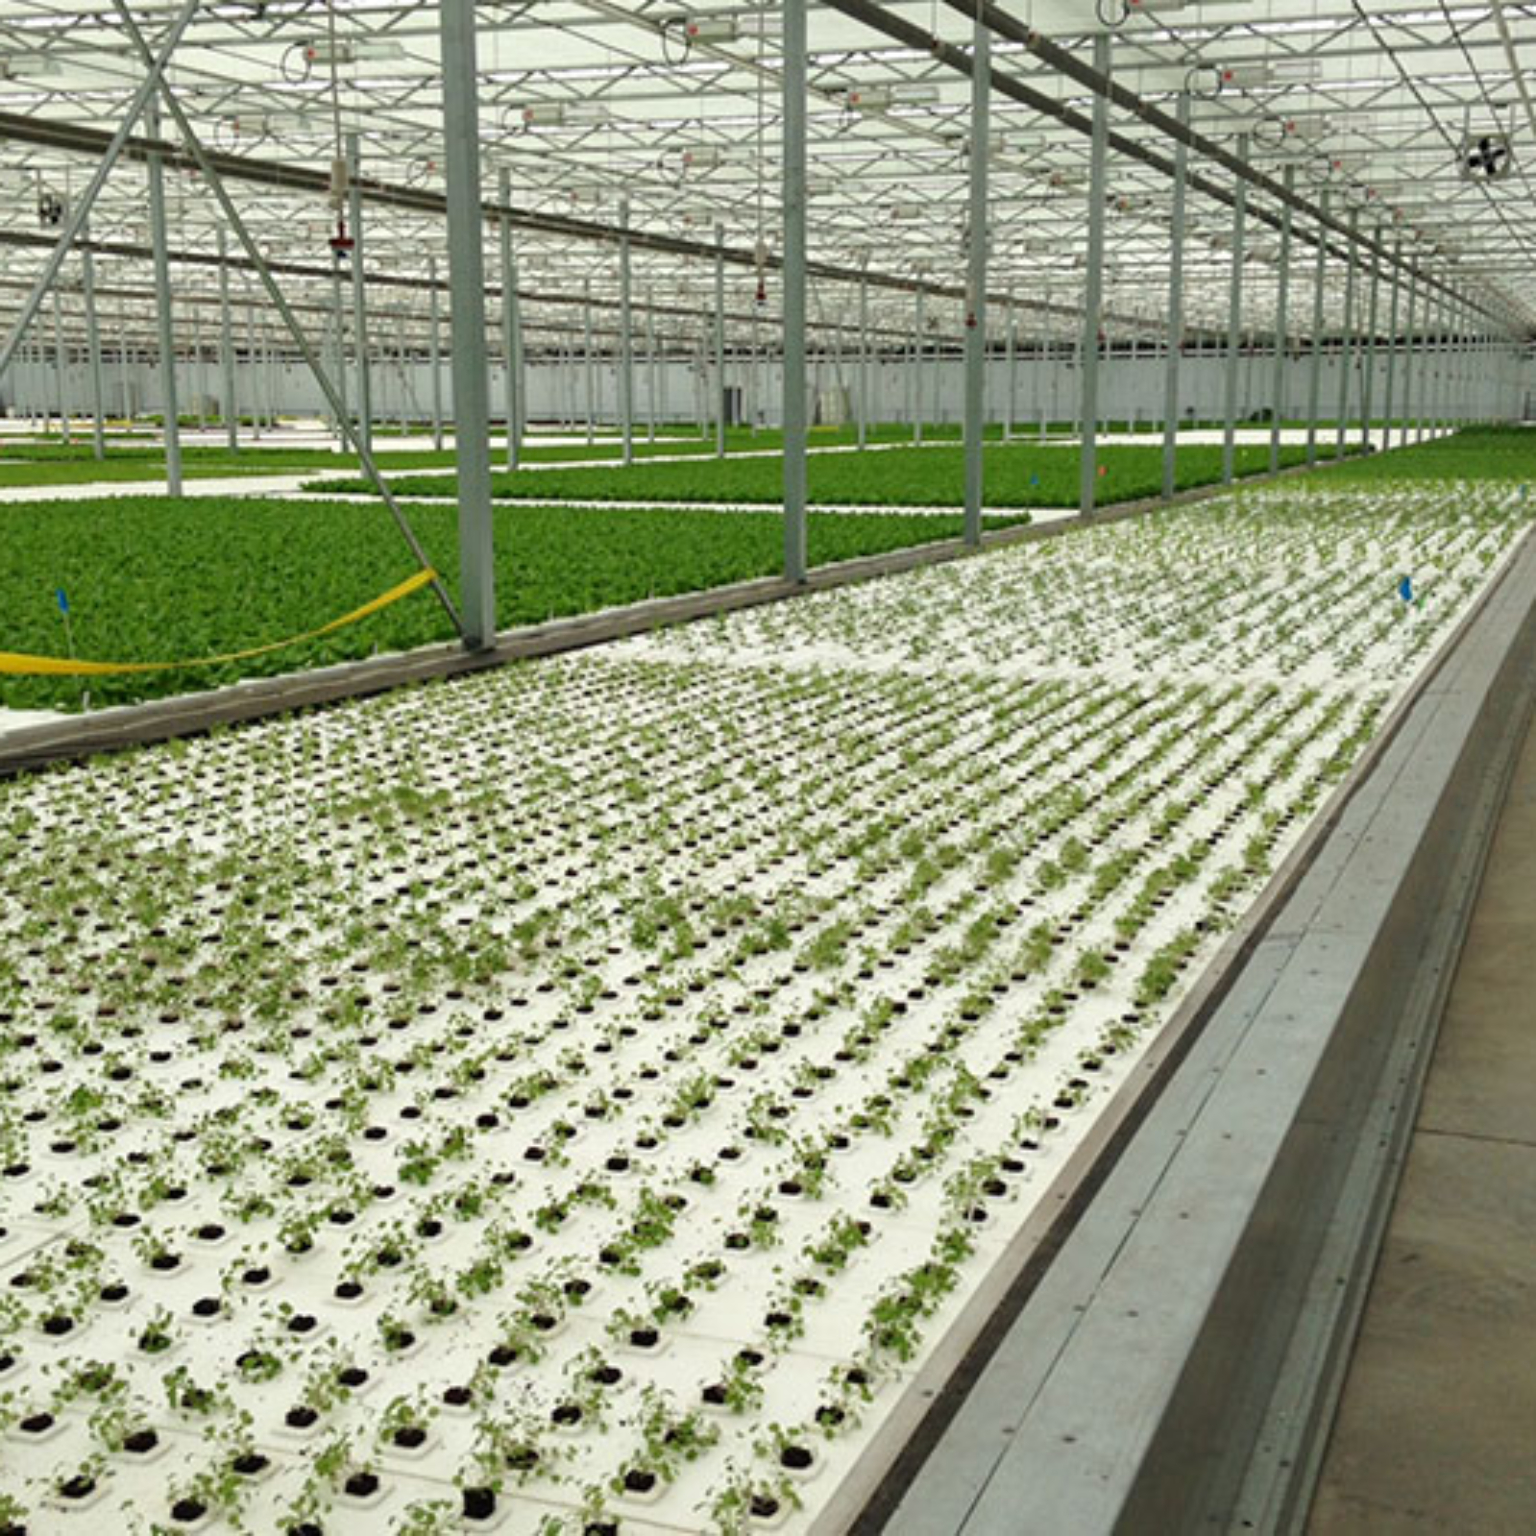 Hydroponics in a greenhouse